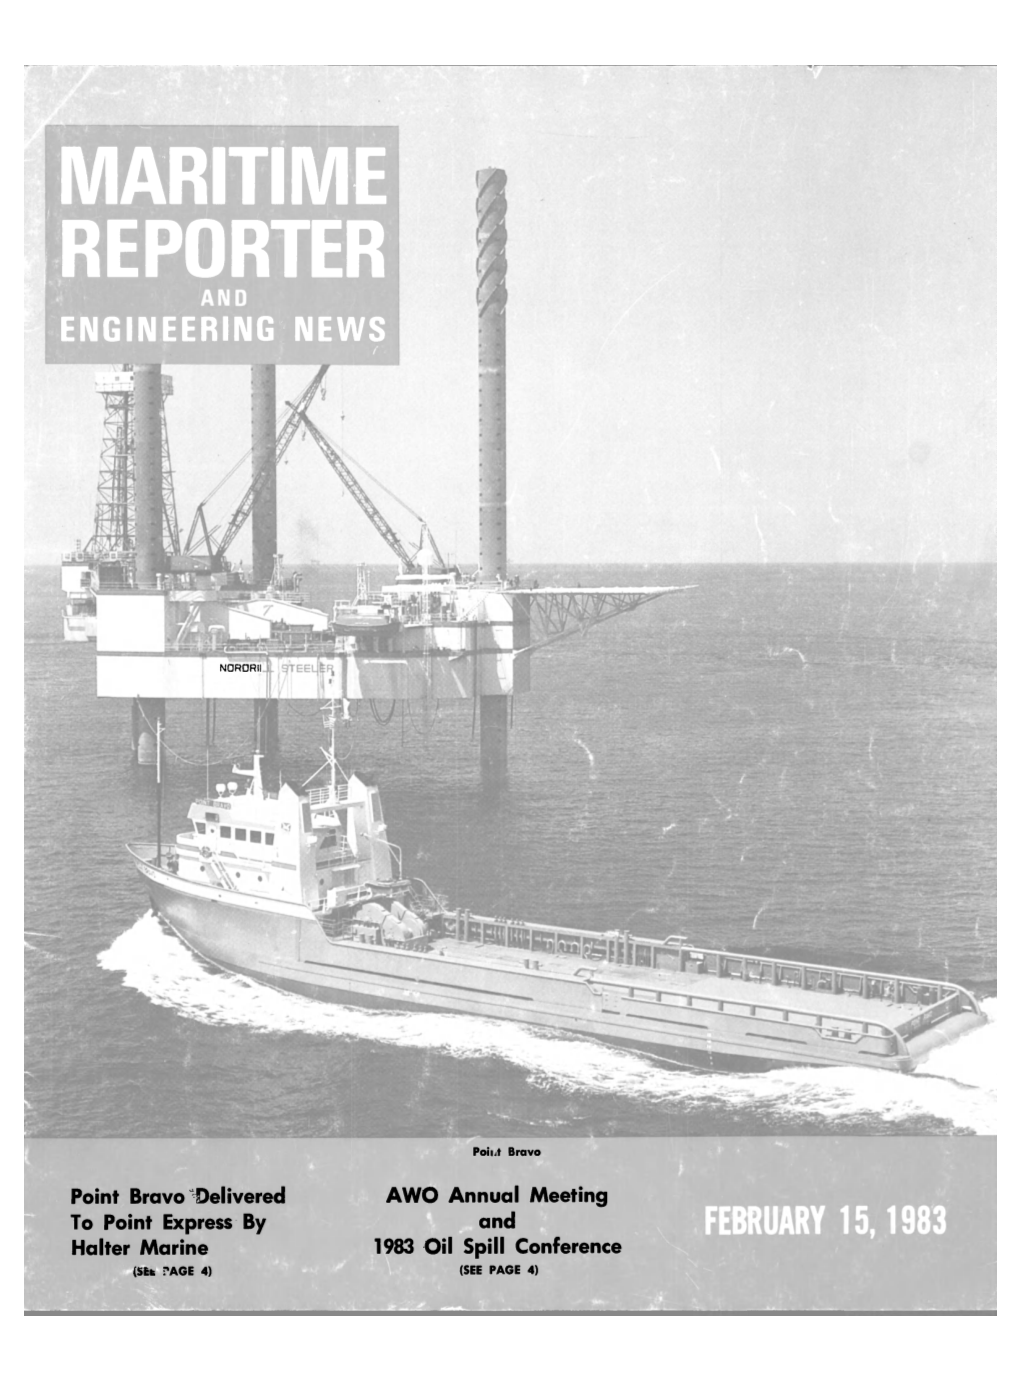 Maritime Reporter Engineering News